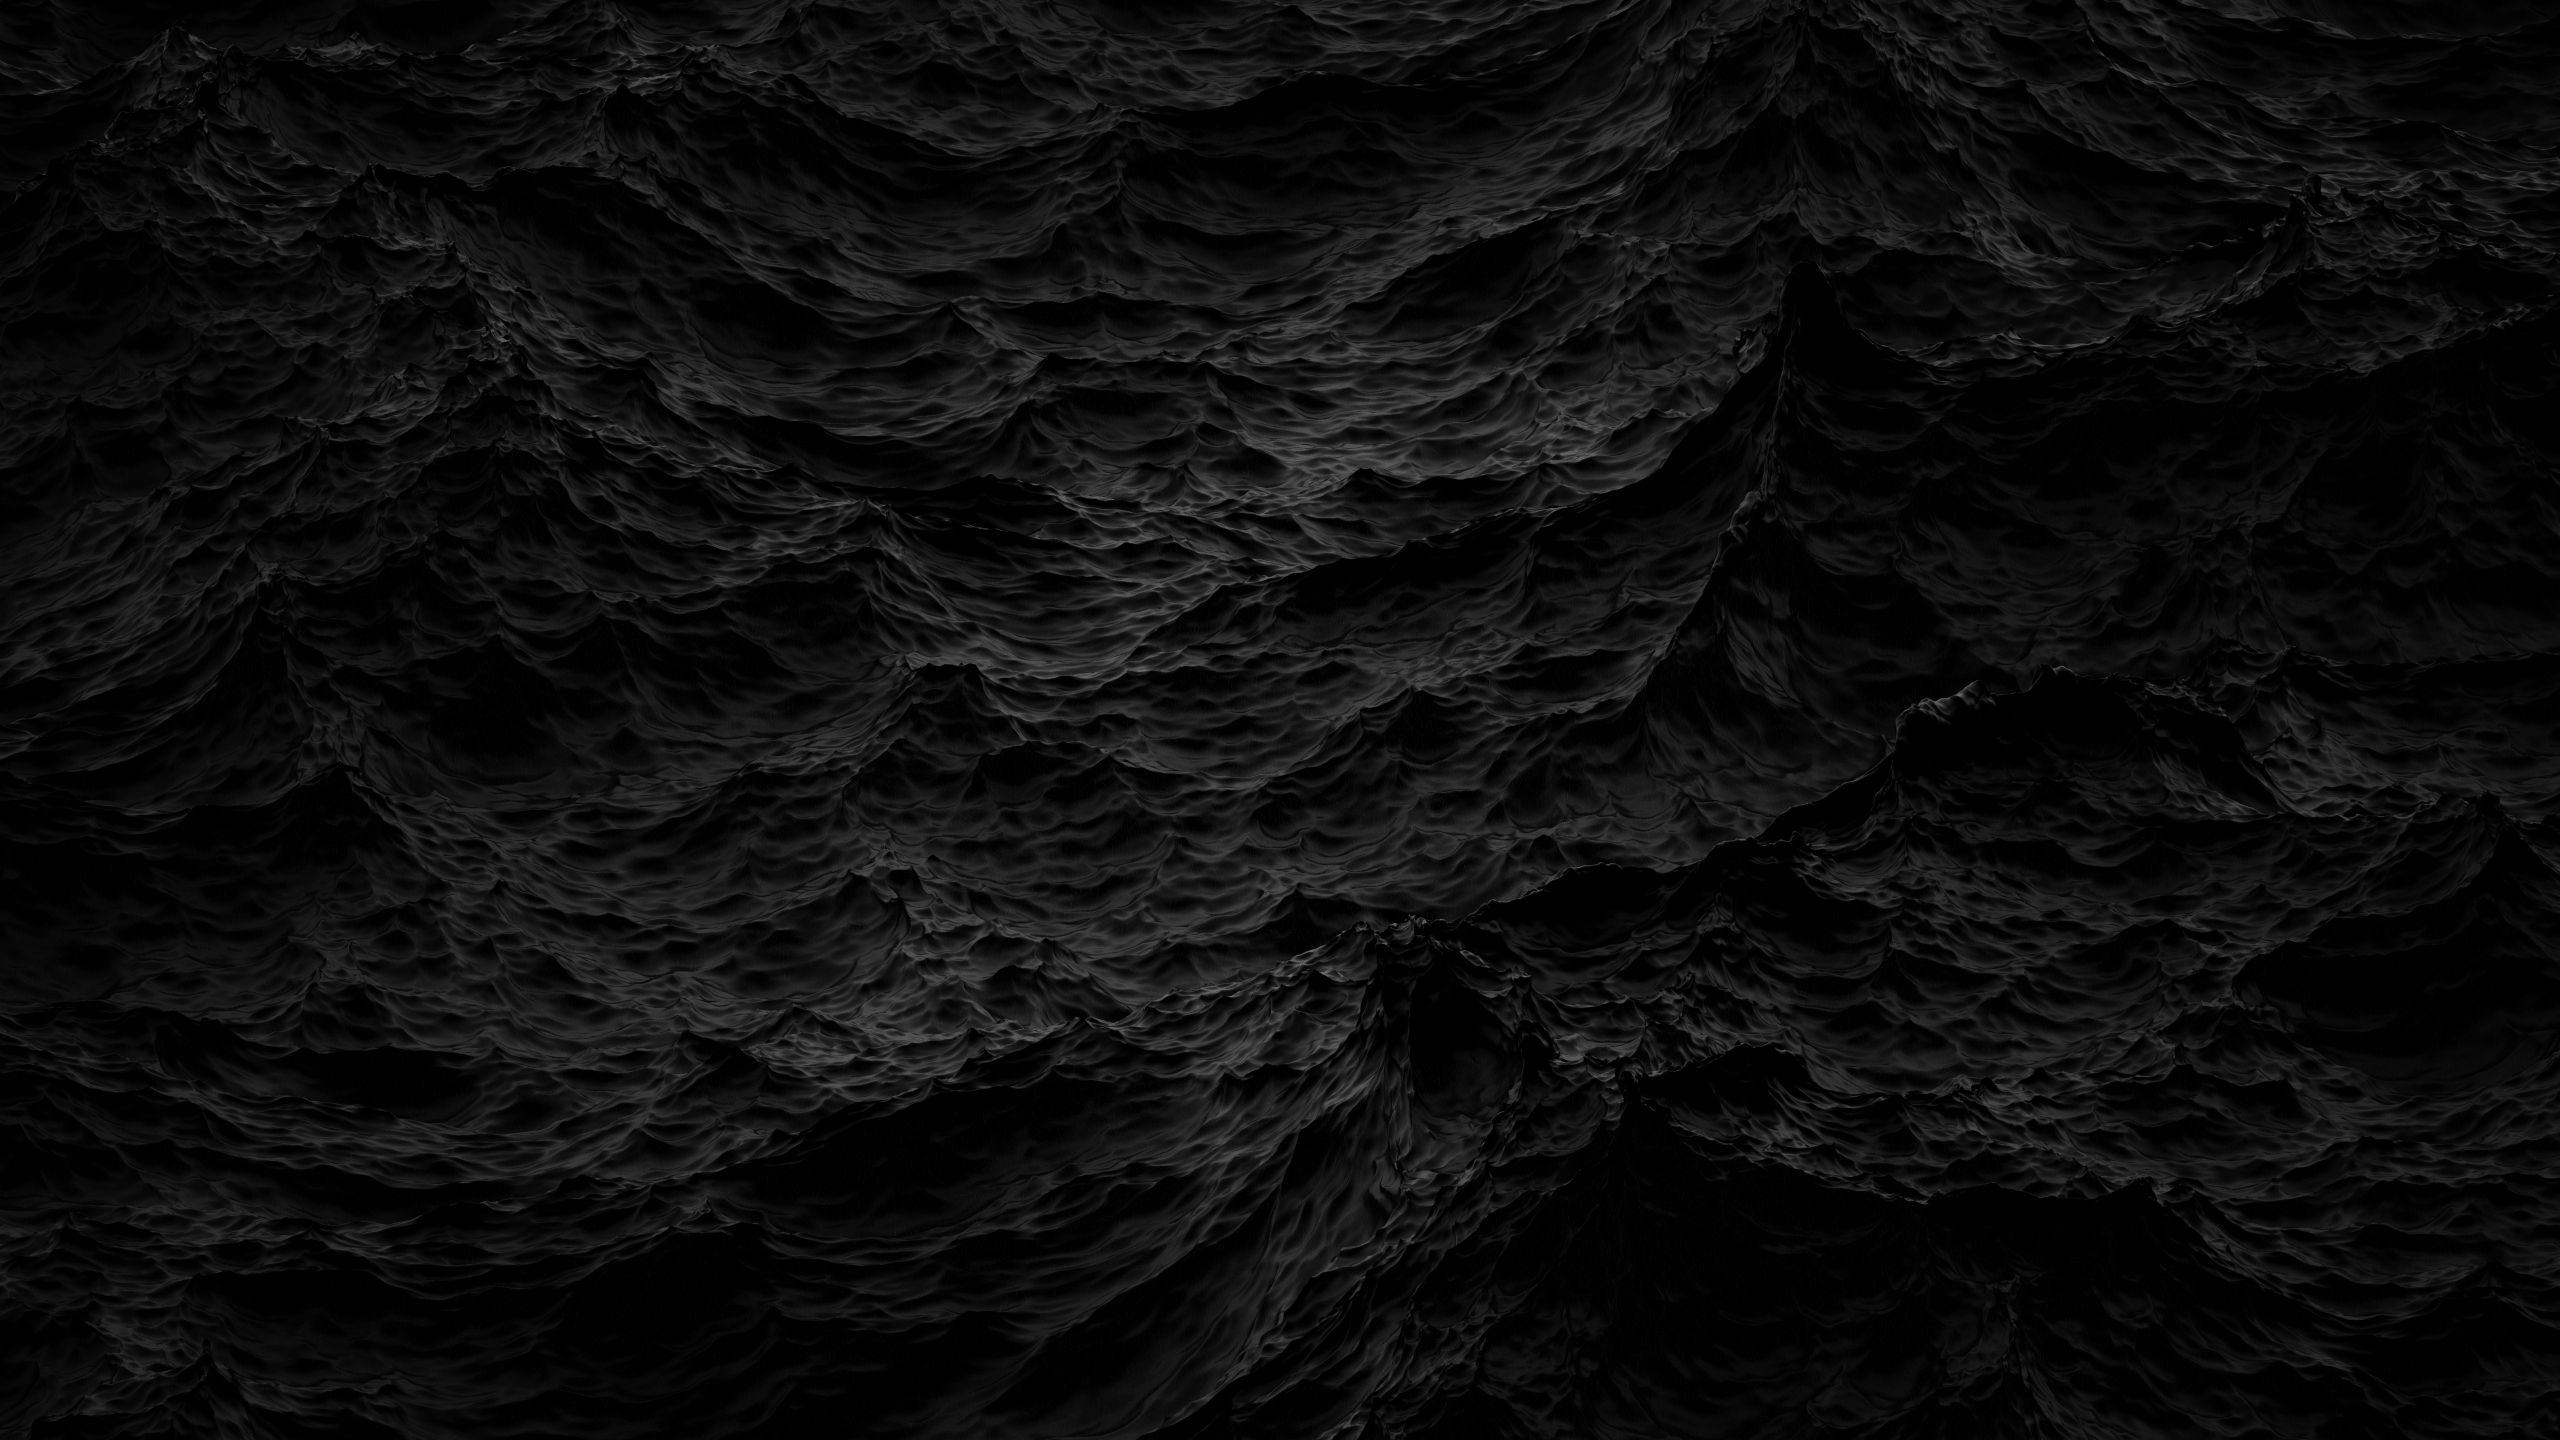 Black Ocean wallpaper in 2560x1440 resolution